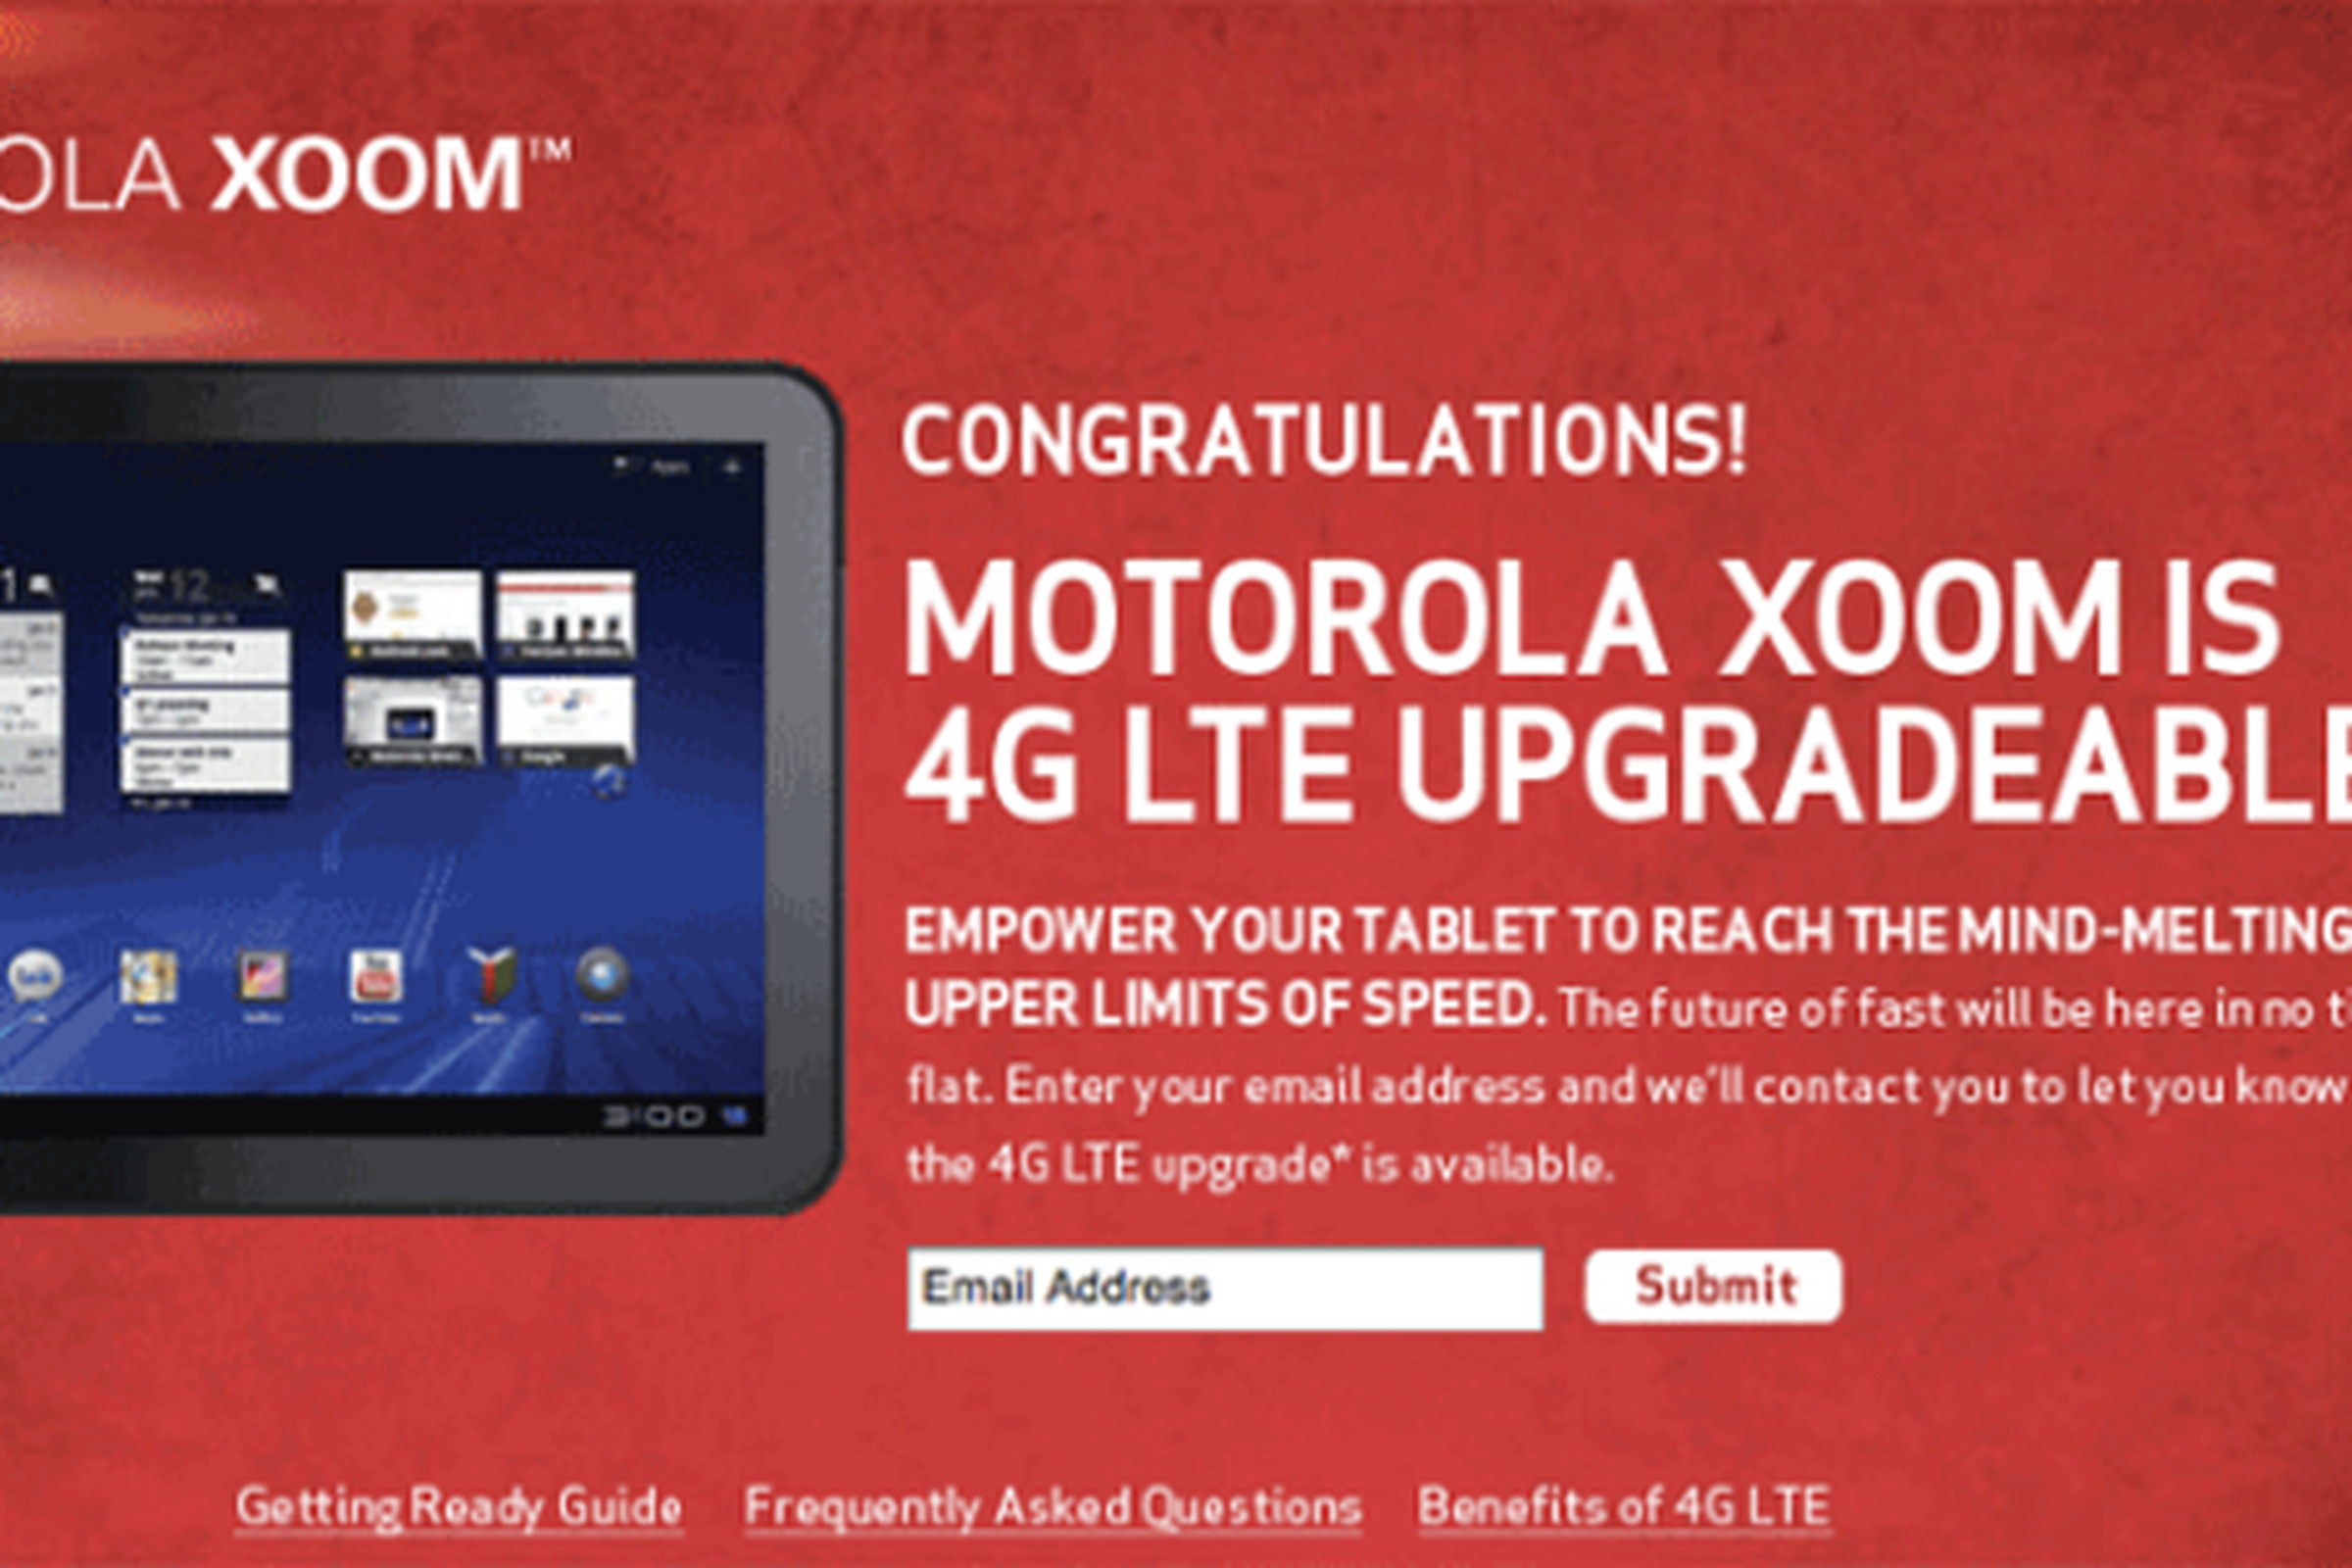 Xoom LTE upgrade promise